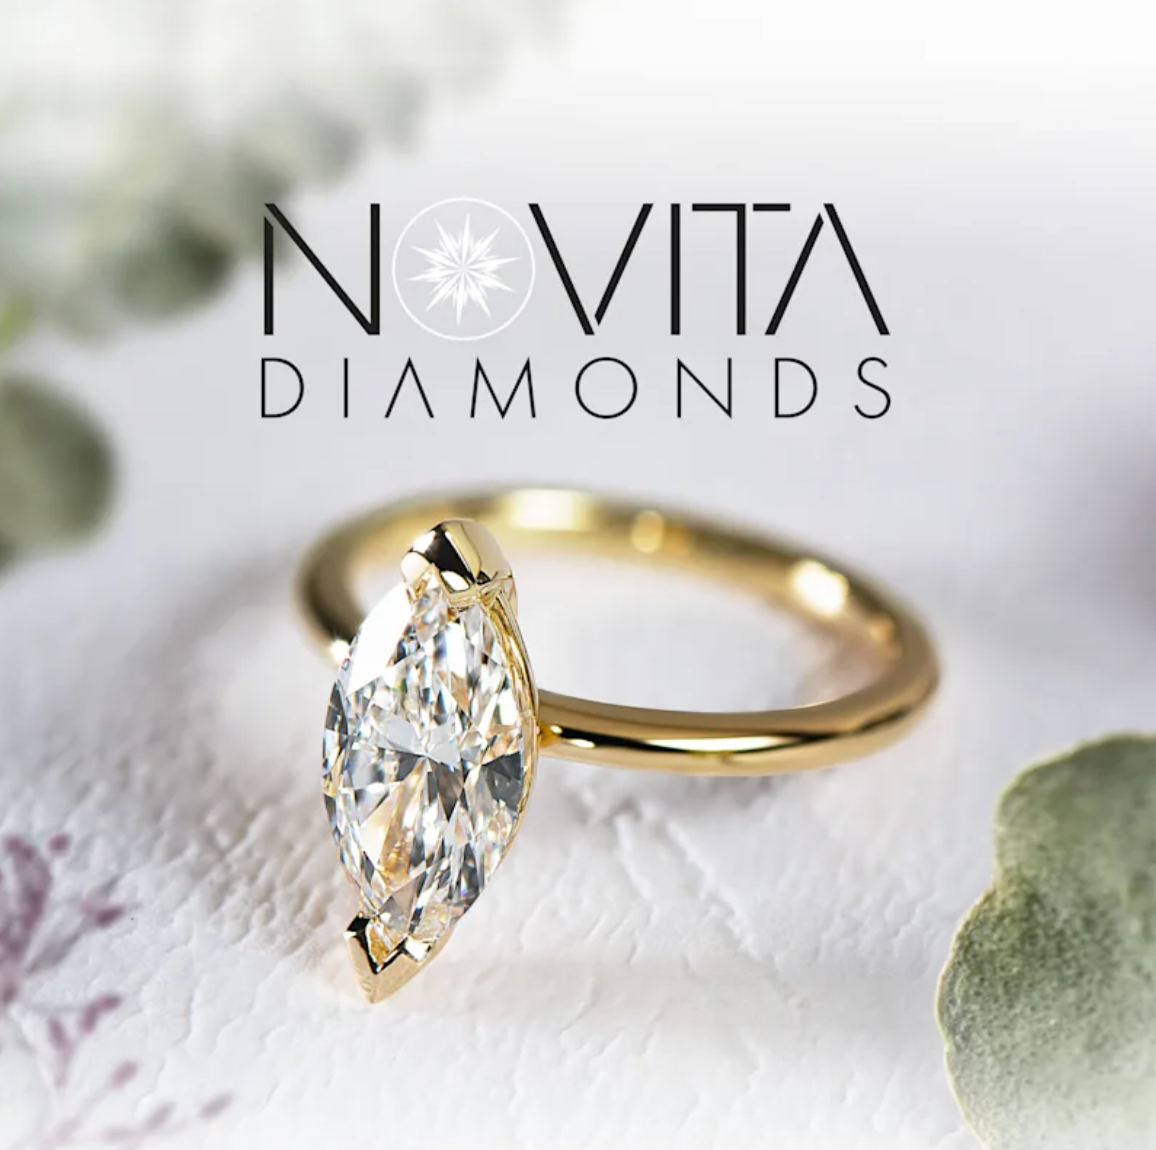 Novita Diamonds Plans To Enter The New Zealand Lab Diamond Market 